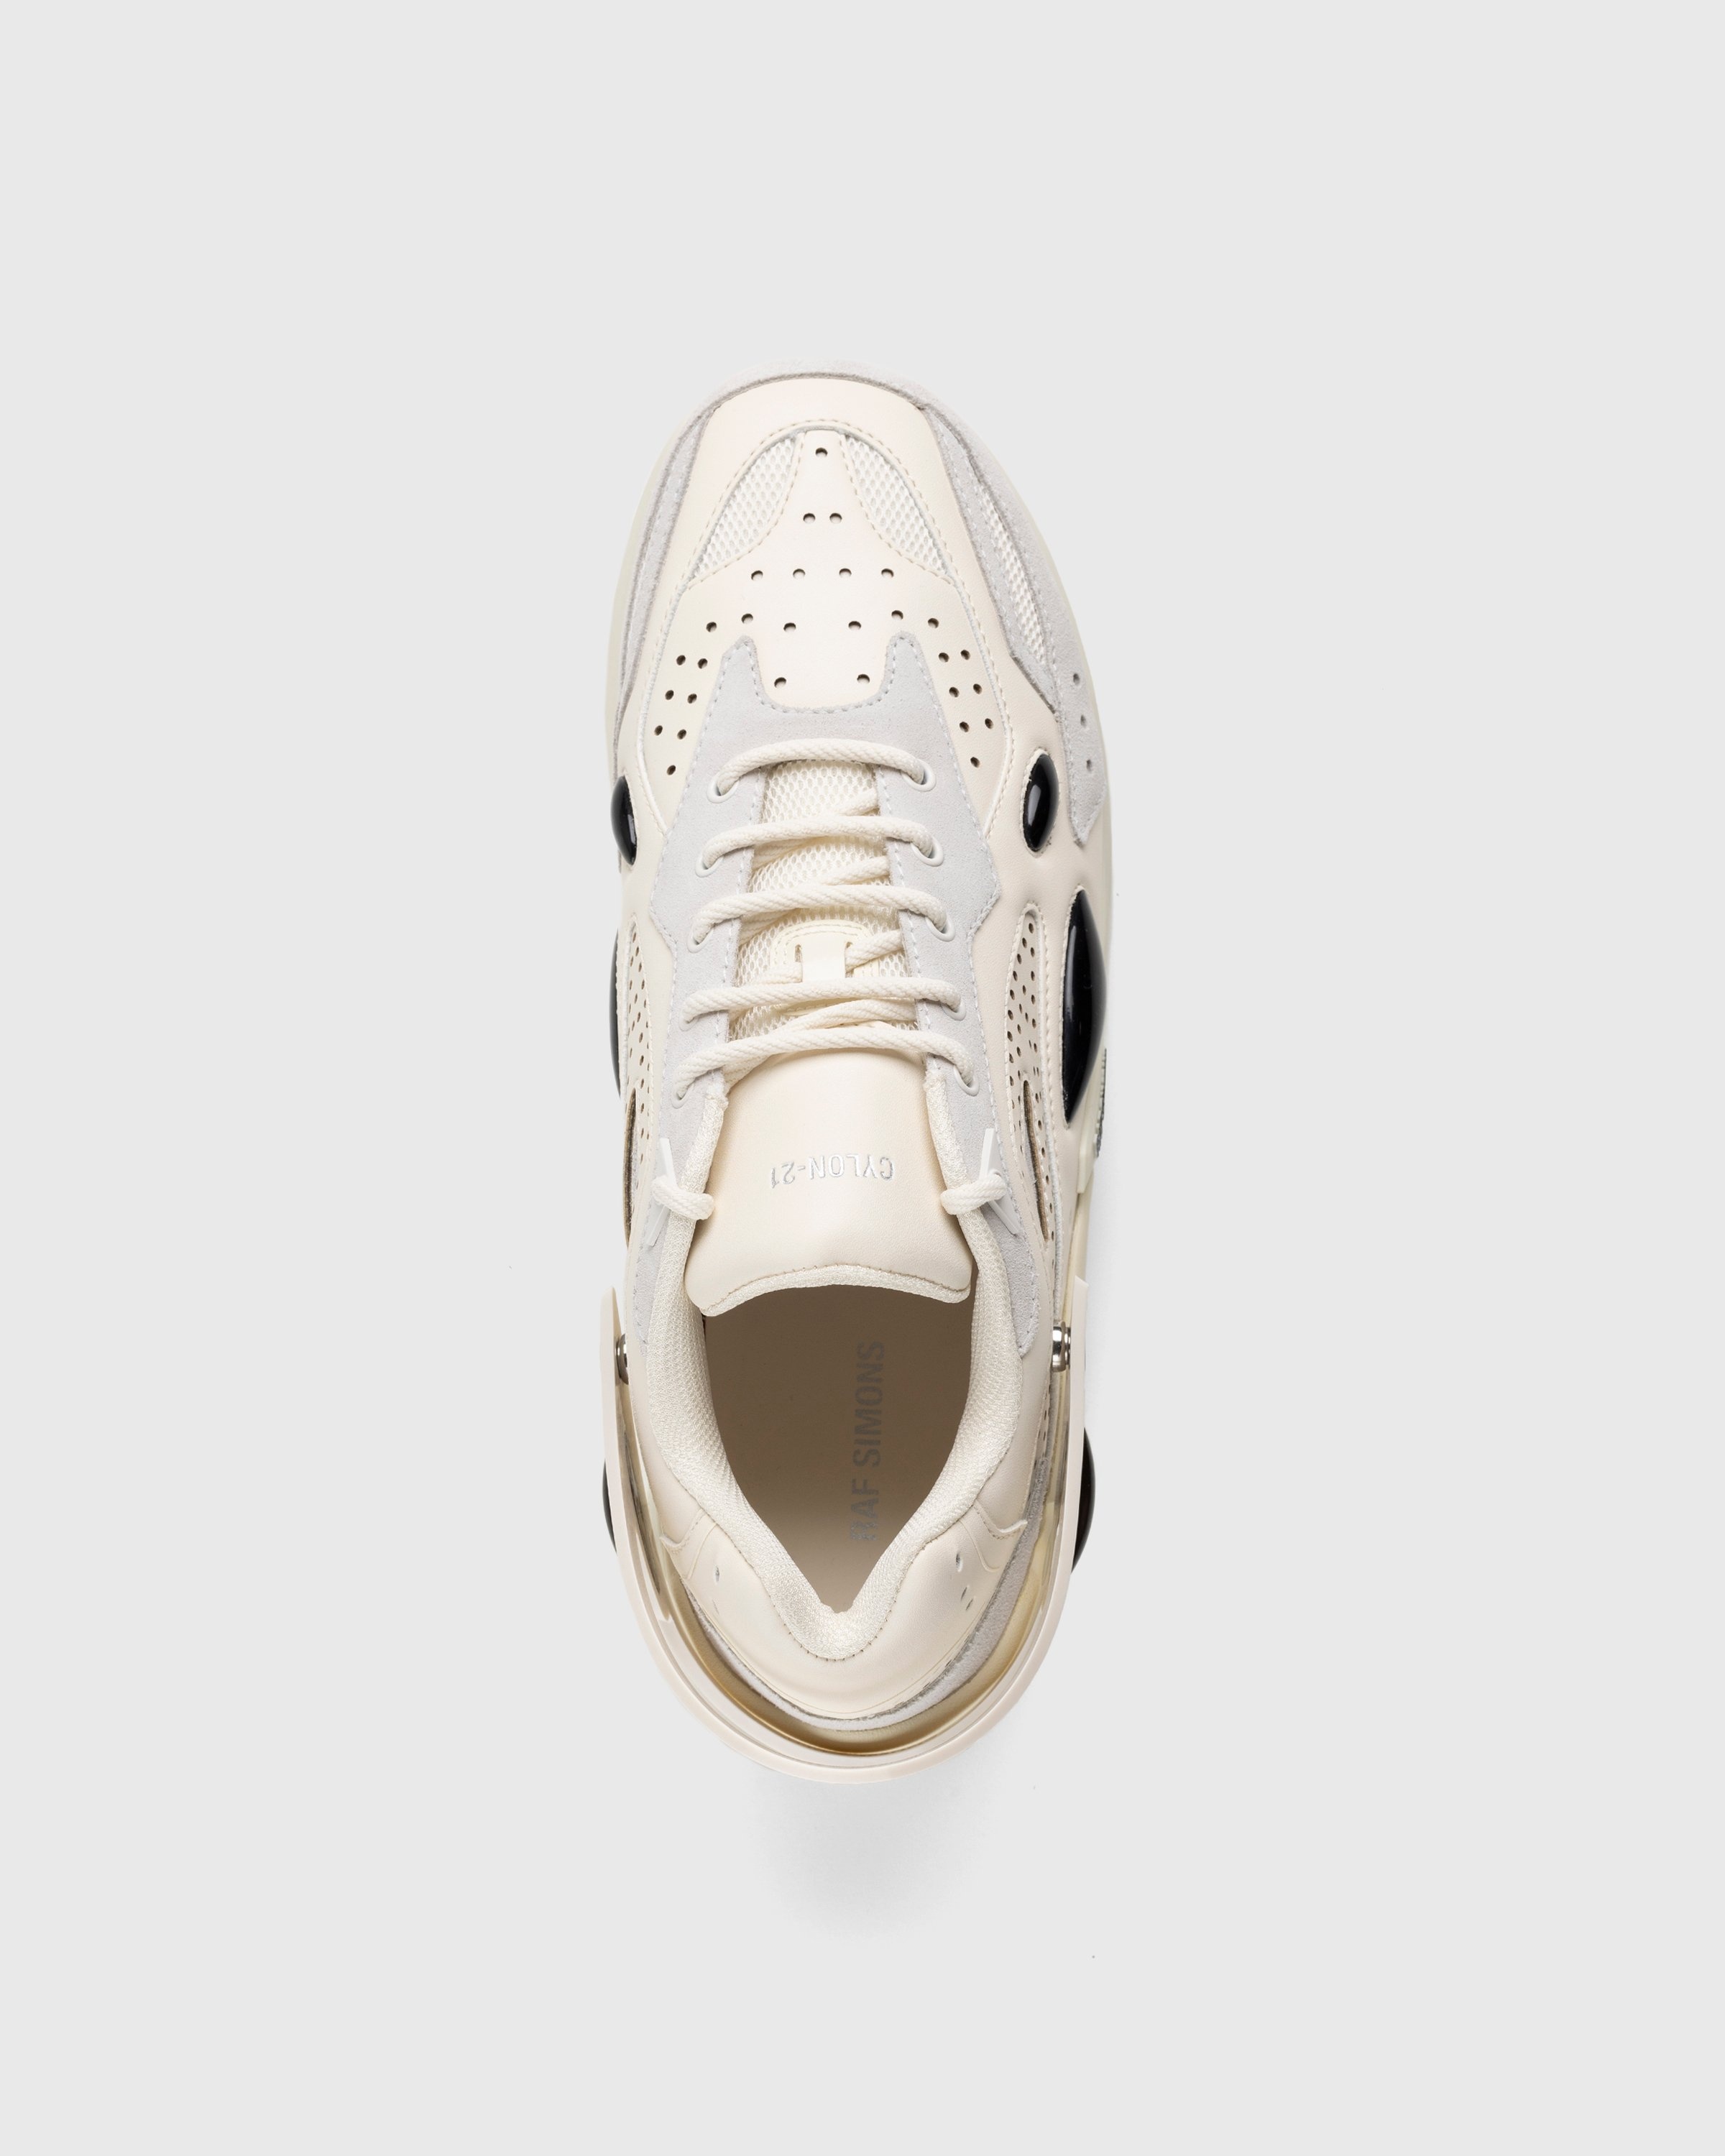 Raf Simons – Cylon 21 White - Sneakers - White - Image 5